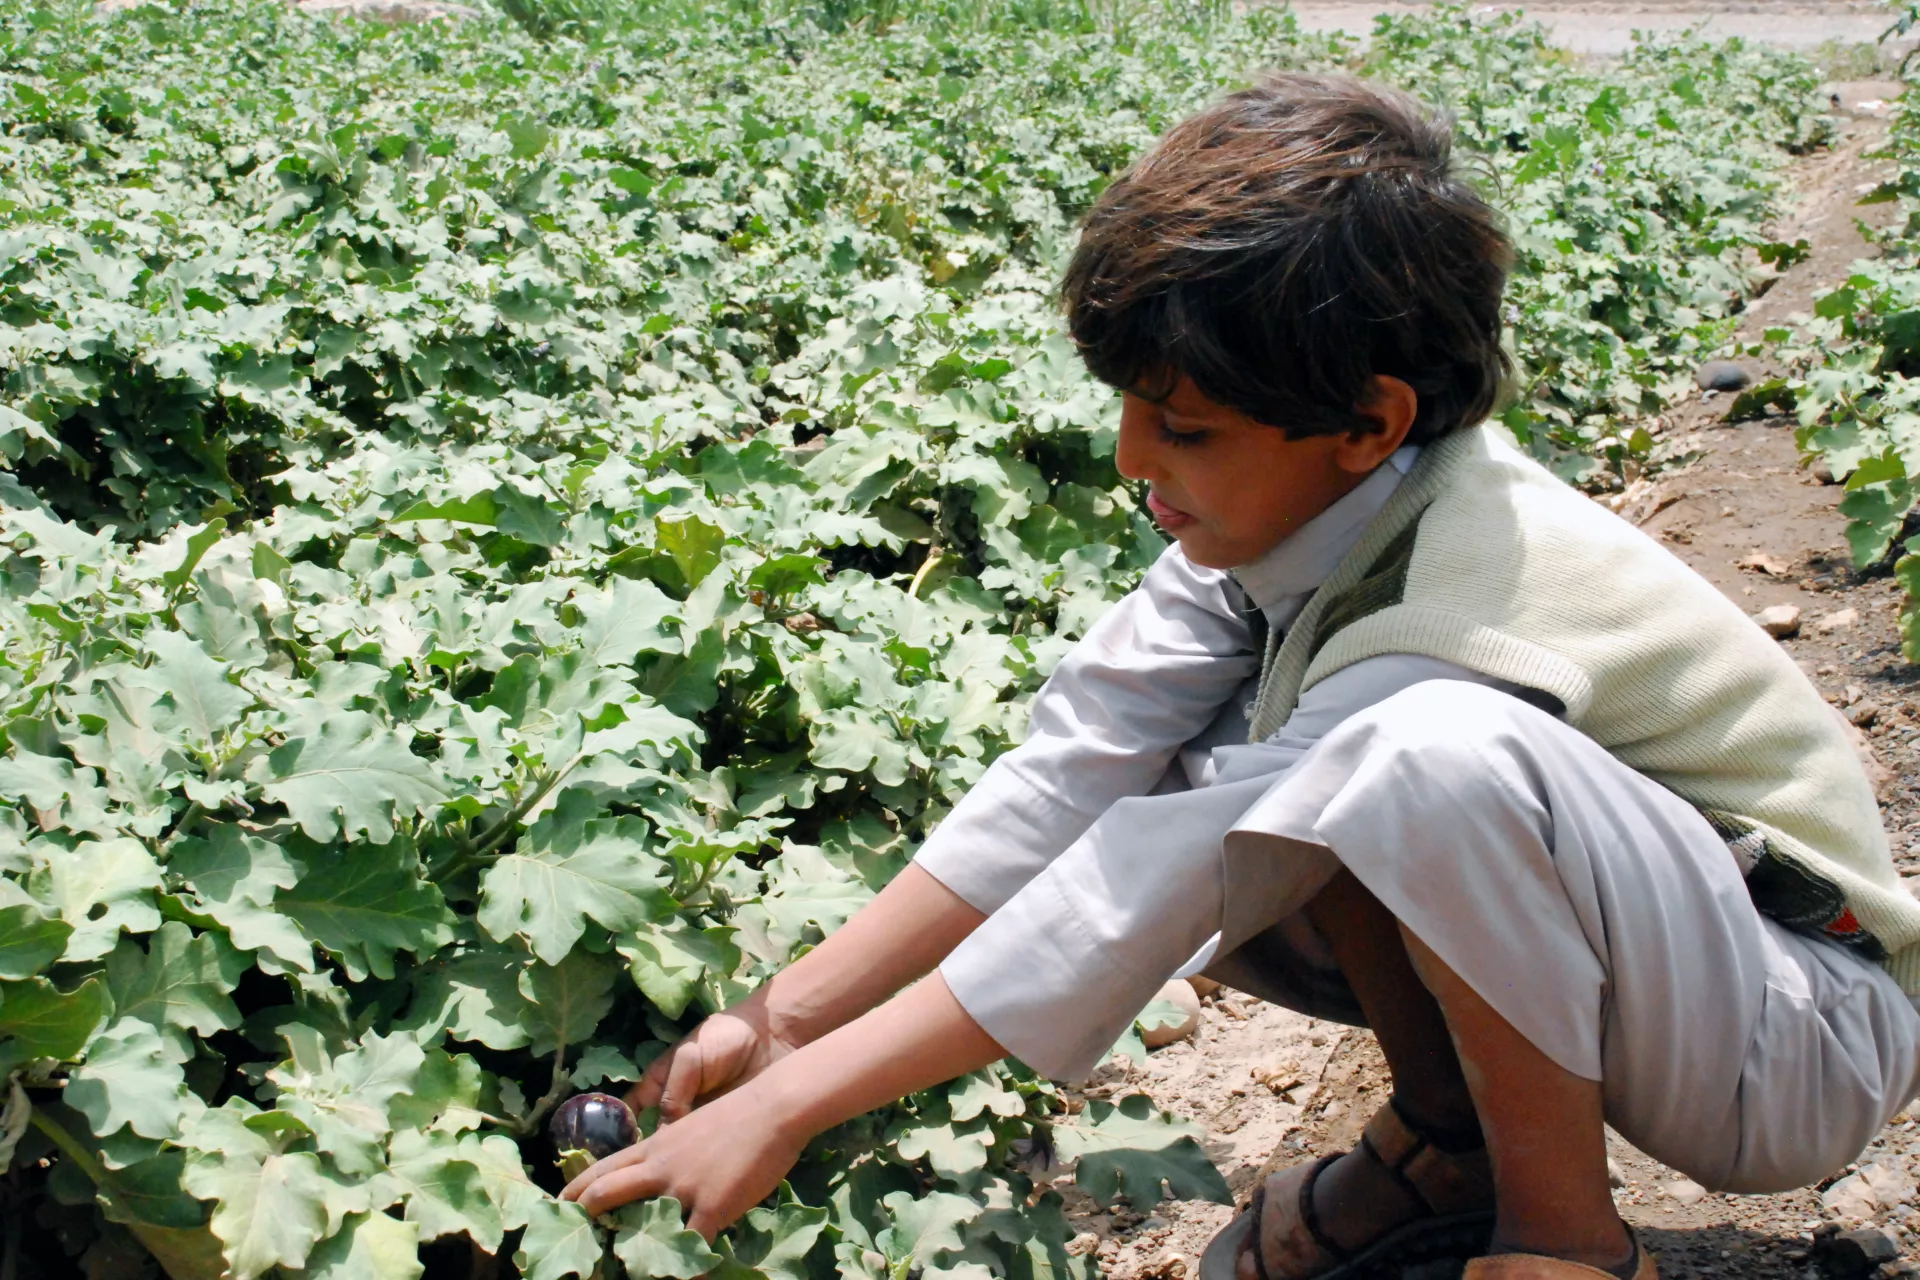 A boy holds some vegetables, Yemen